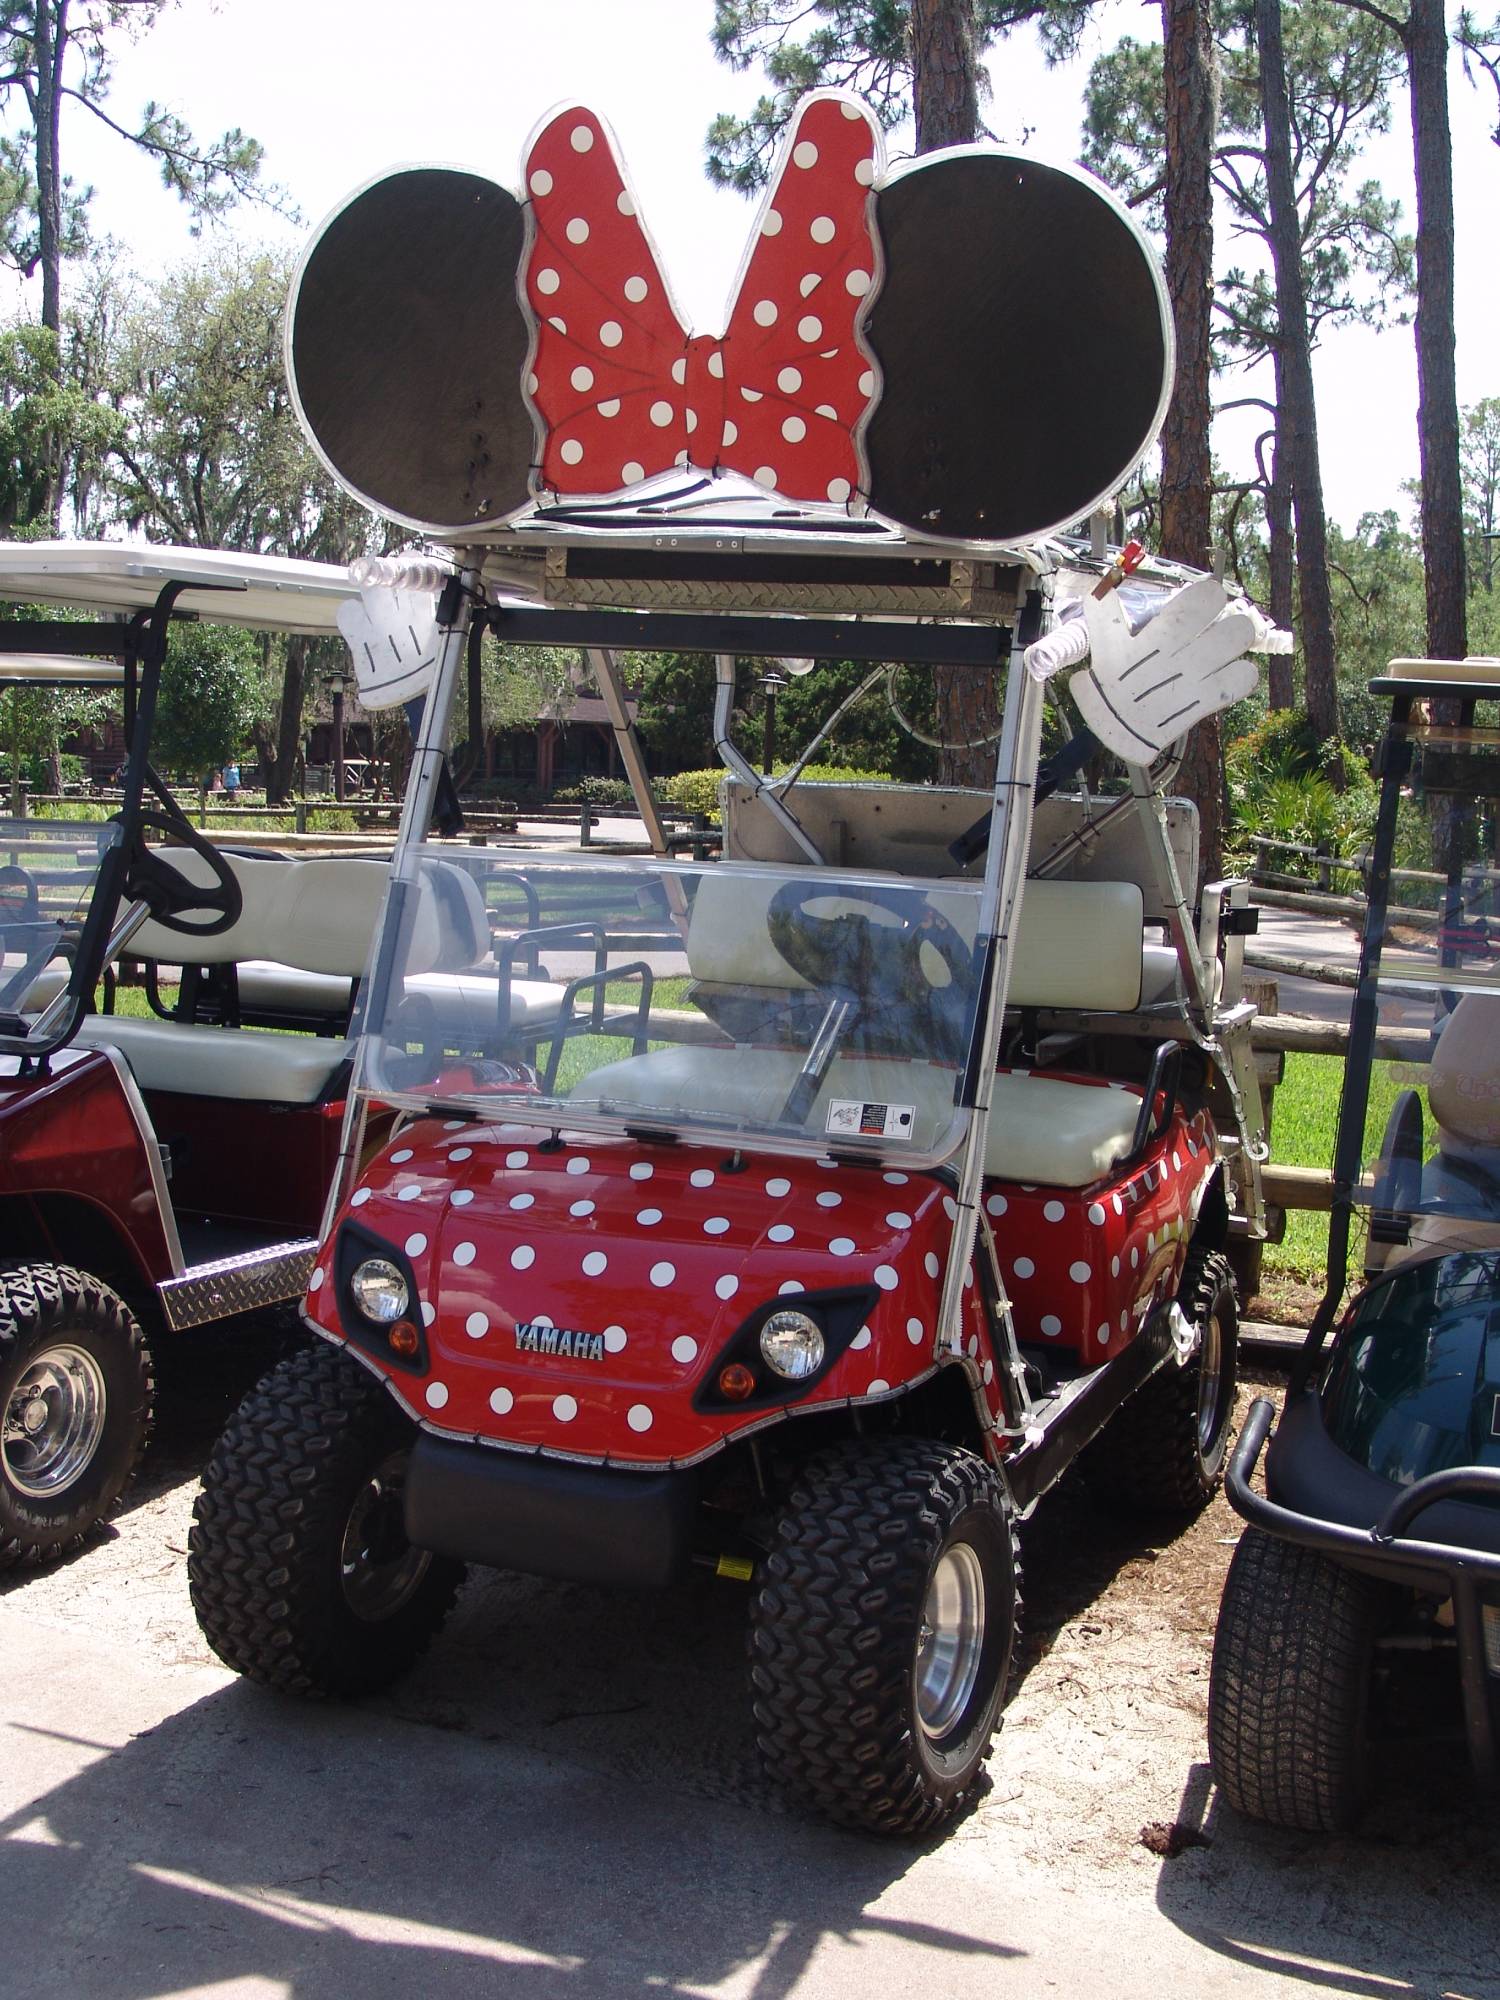 Fort Wilderness - Minnie Mouse golf cart